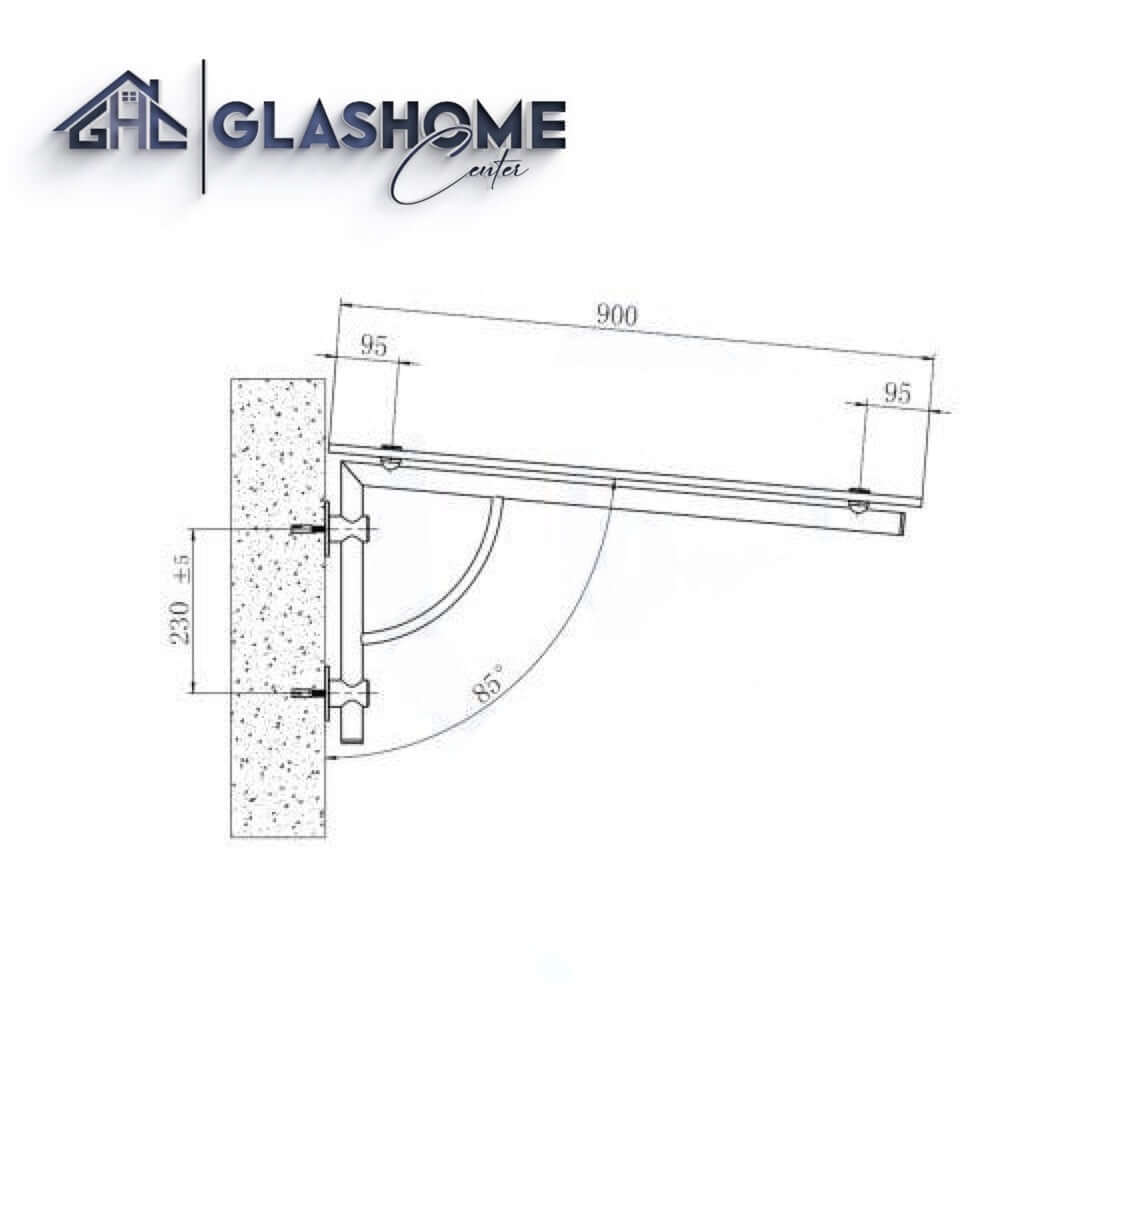 GlasHomeCenter - glass canopy - Clear glass - 200x90cm - 13.1mm VSG - incl. 3 Edelstahlhalterungen Variant "Athens"